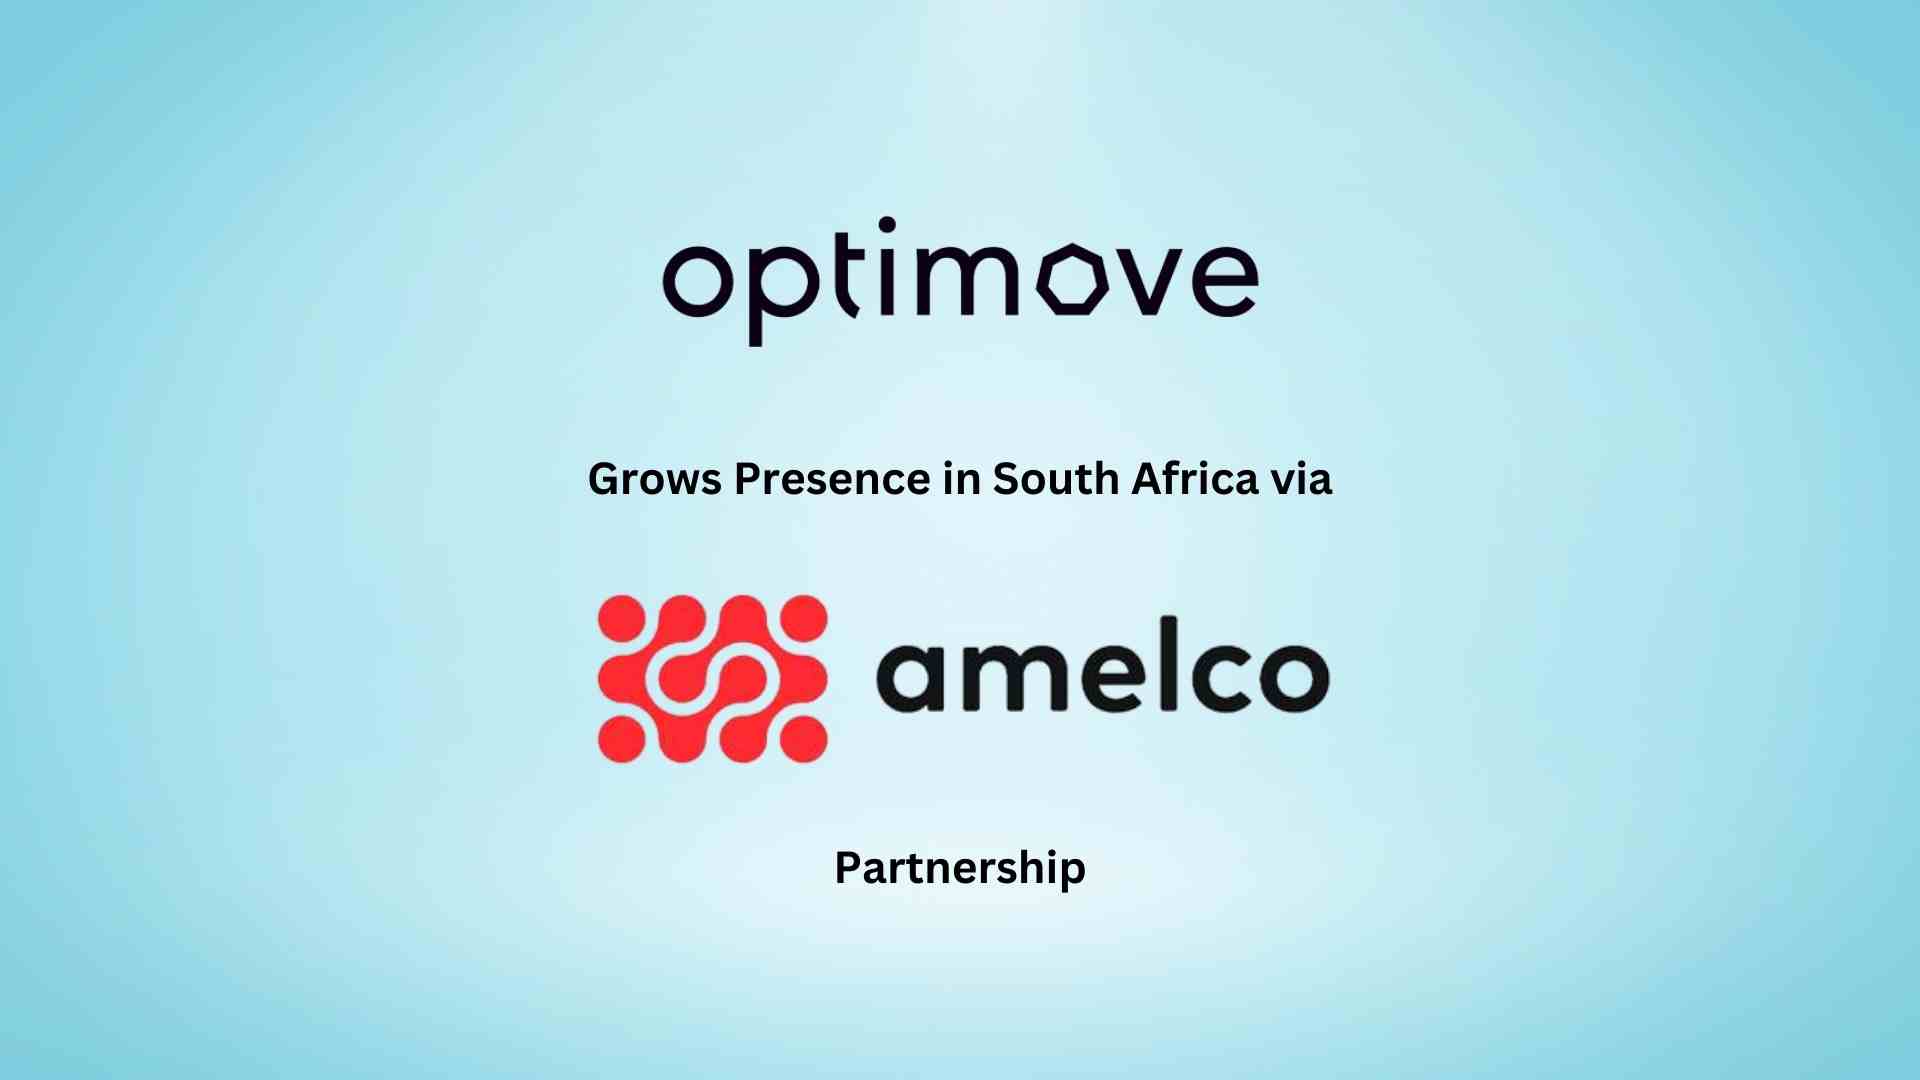 Optimove Grows Presence in South Africa via Amelco Partnership